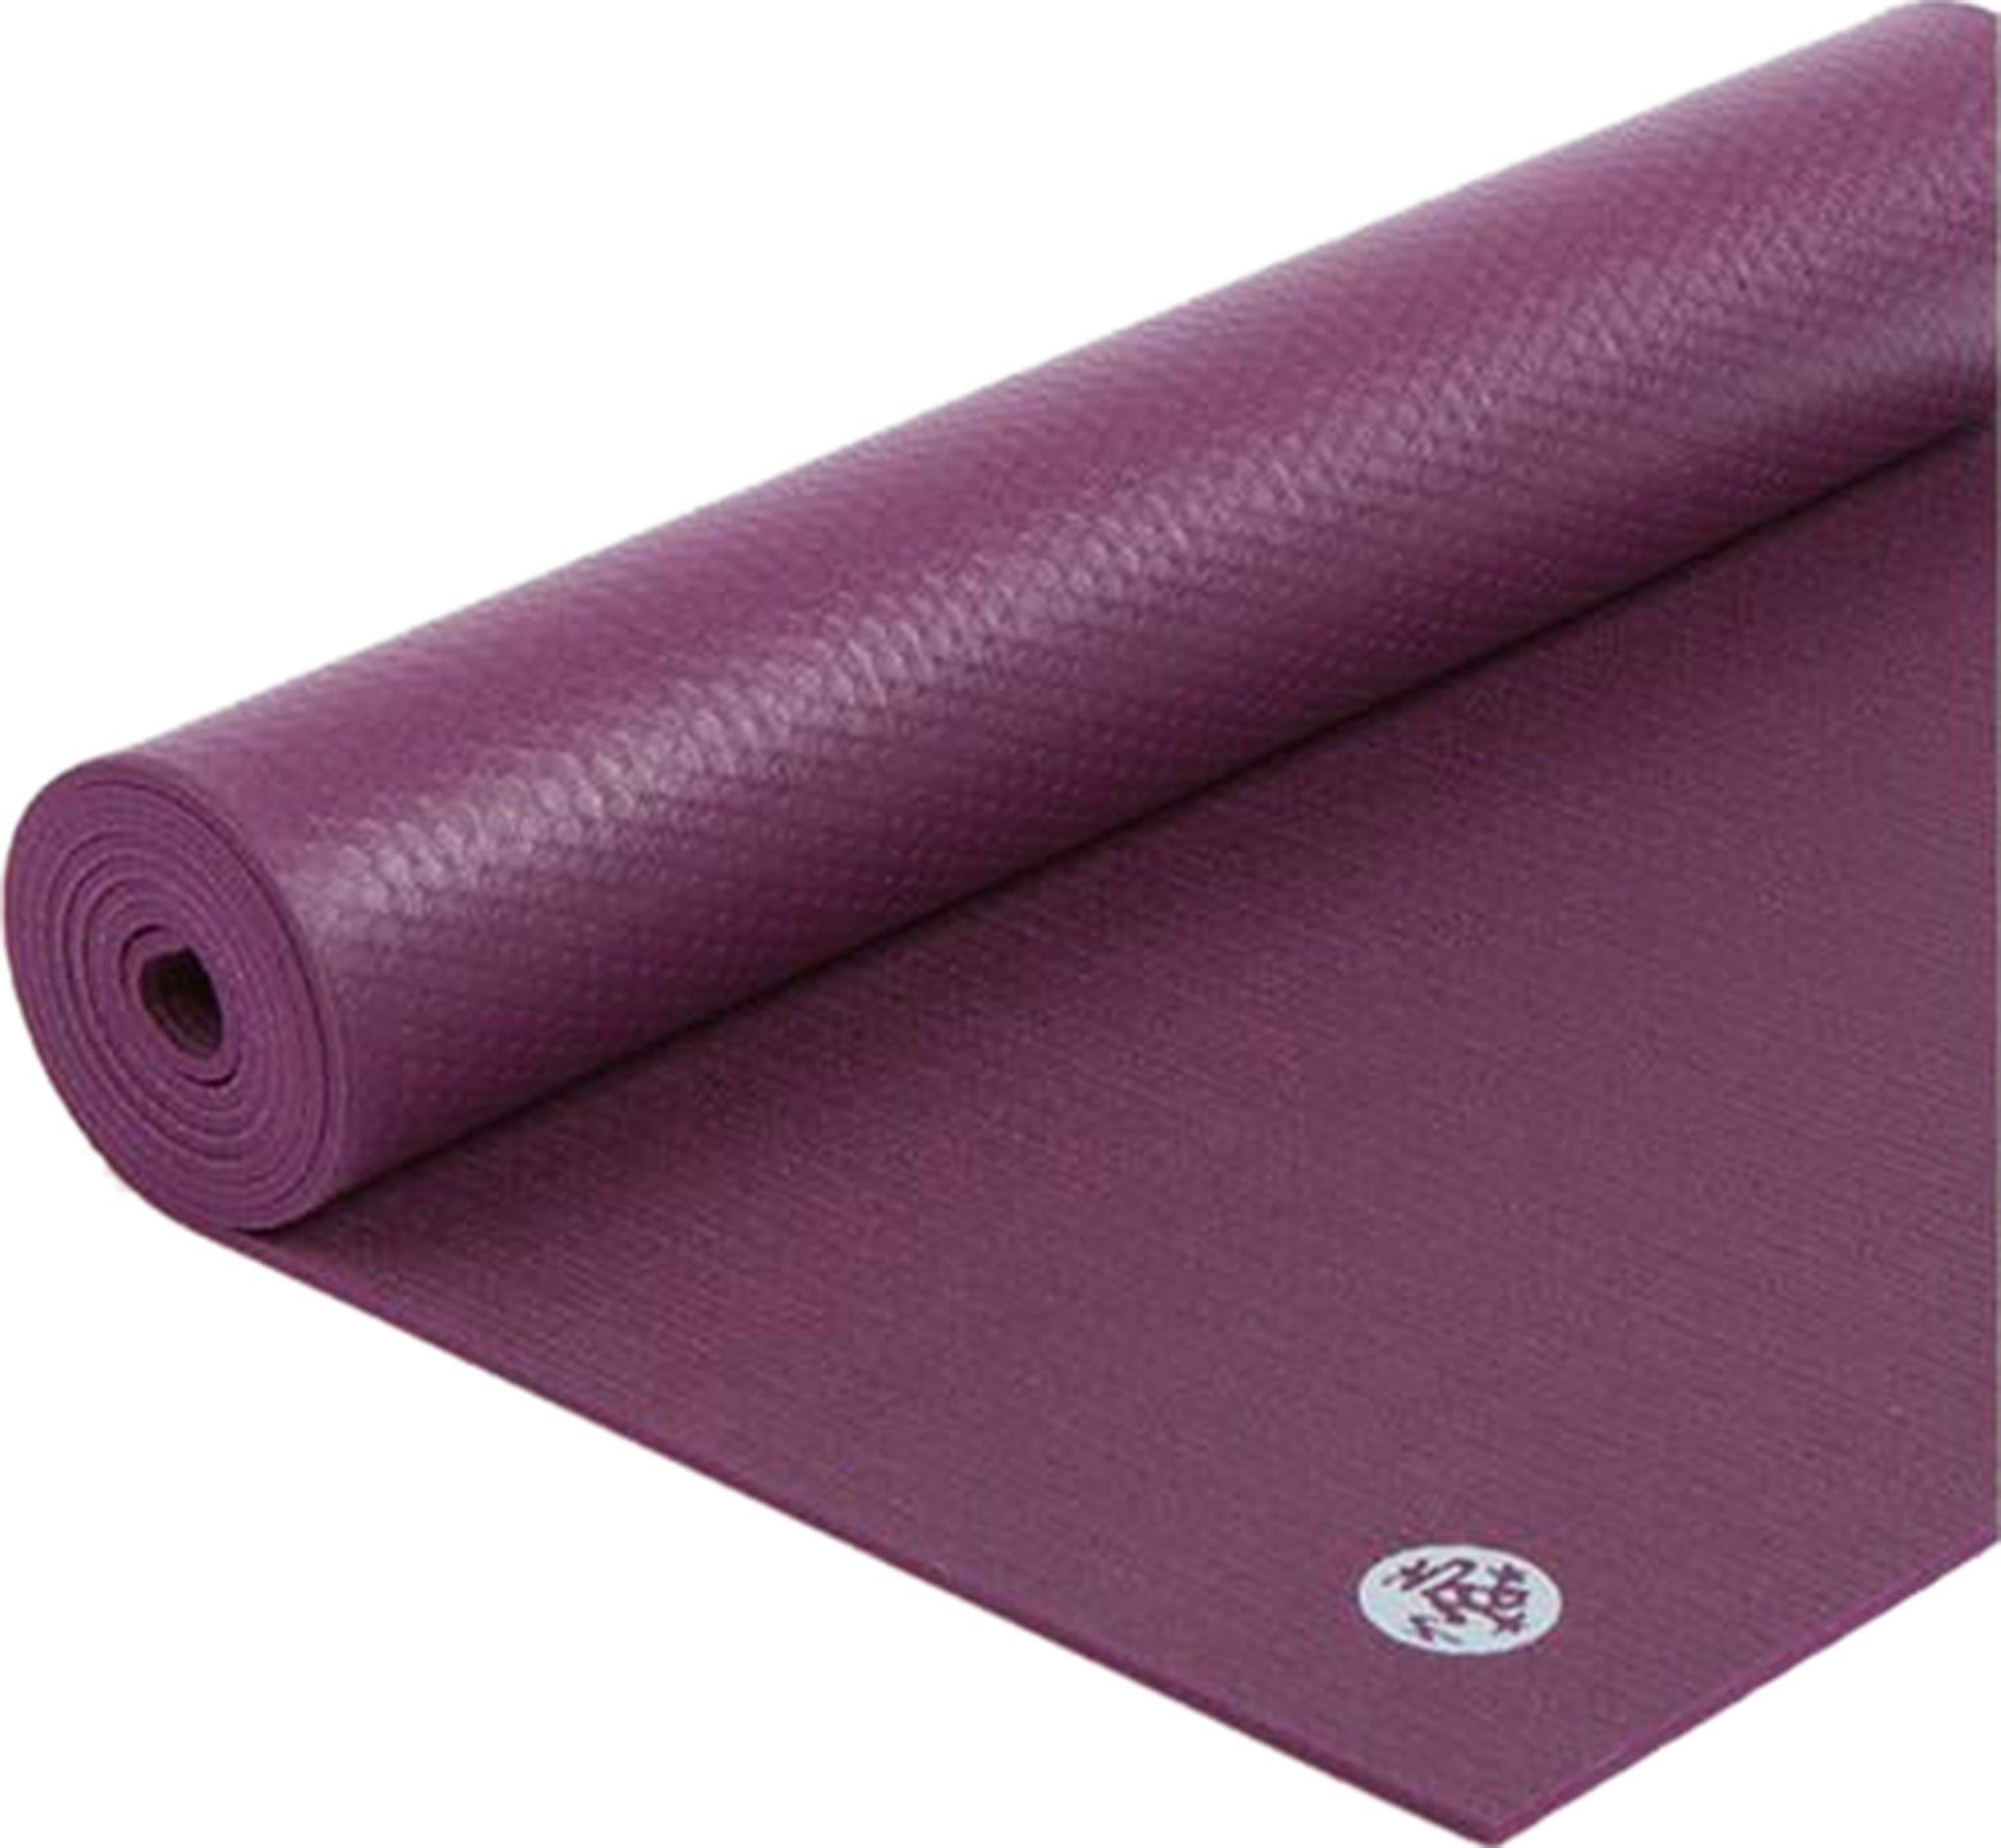  Manduka PROlite Yoga Mat, Indulge, 71 x 24 : Sports